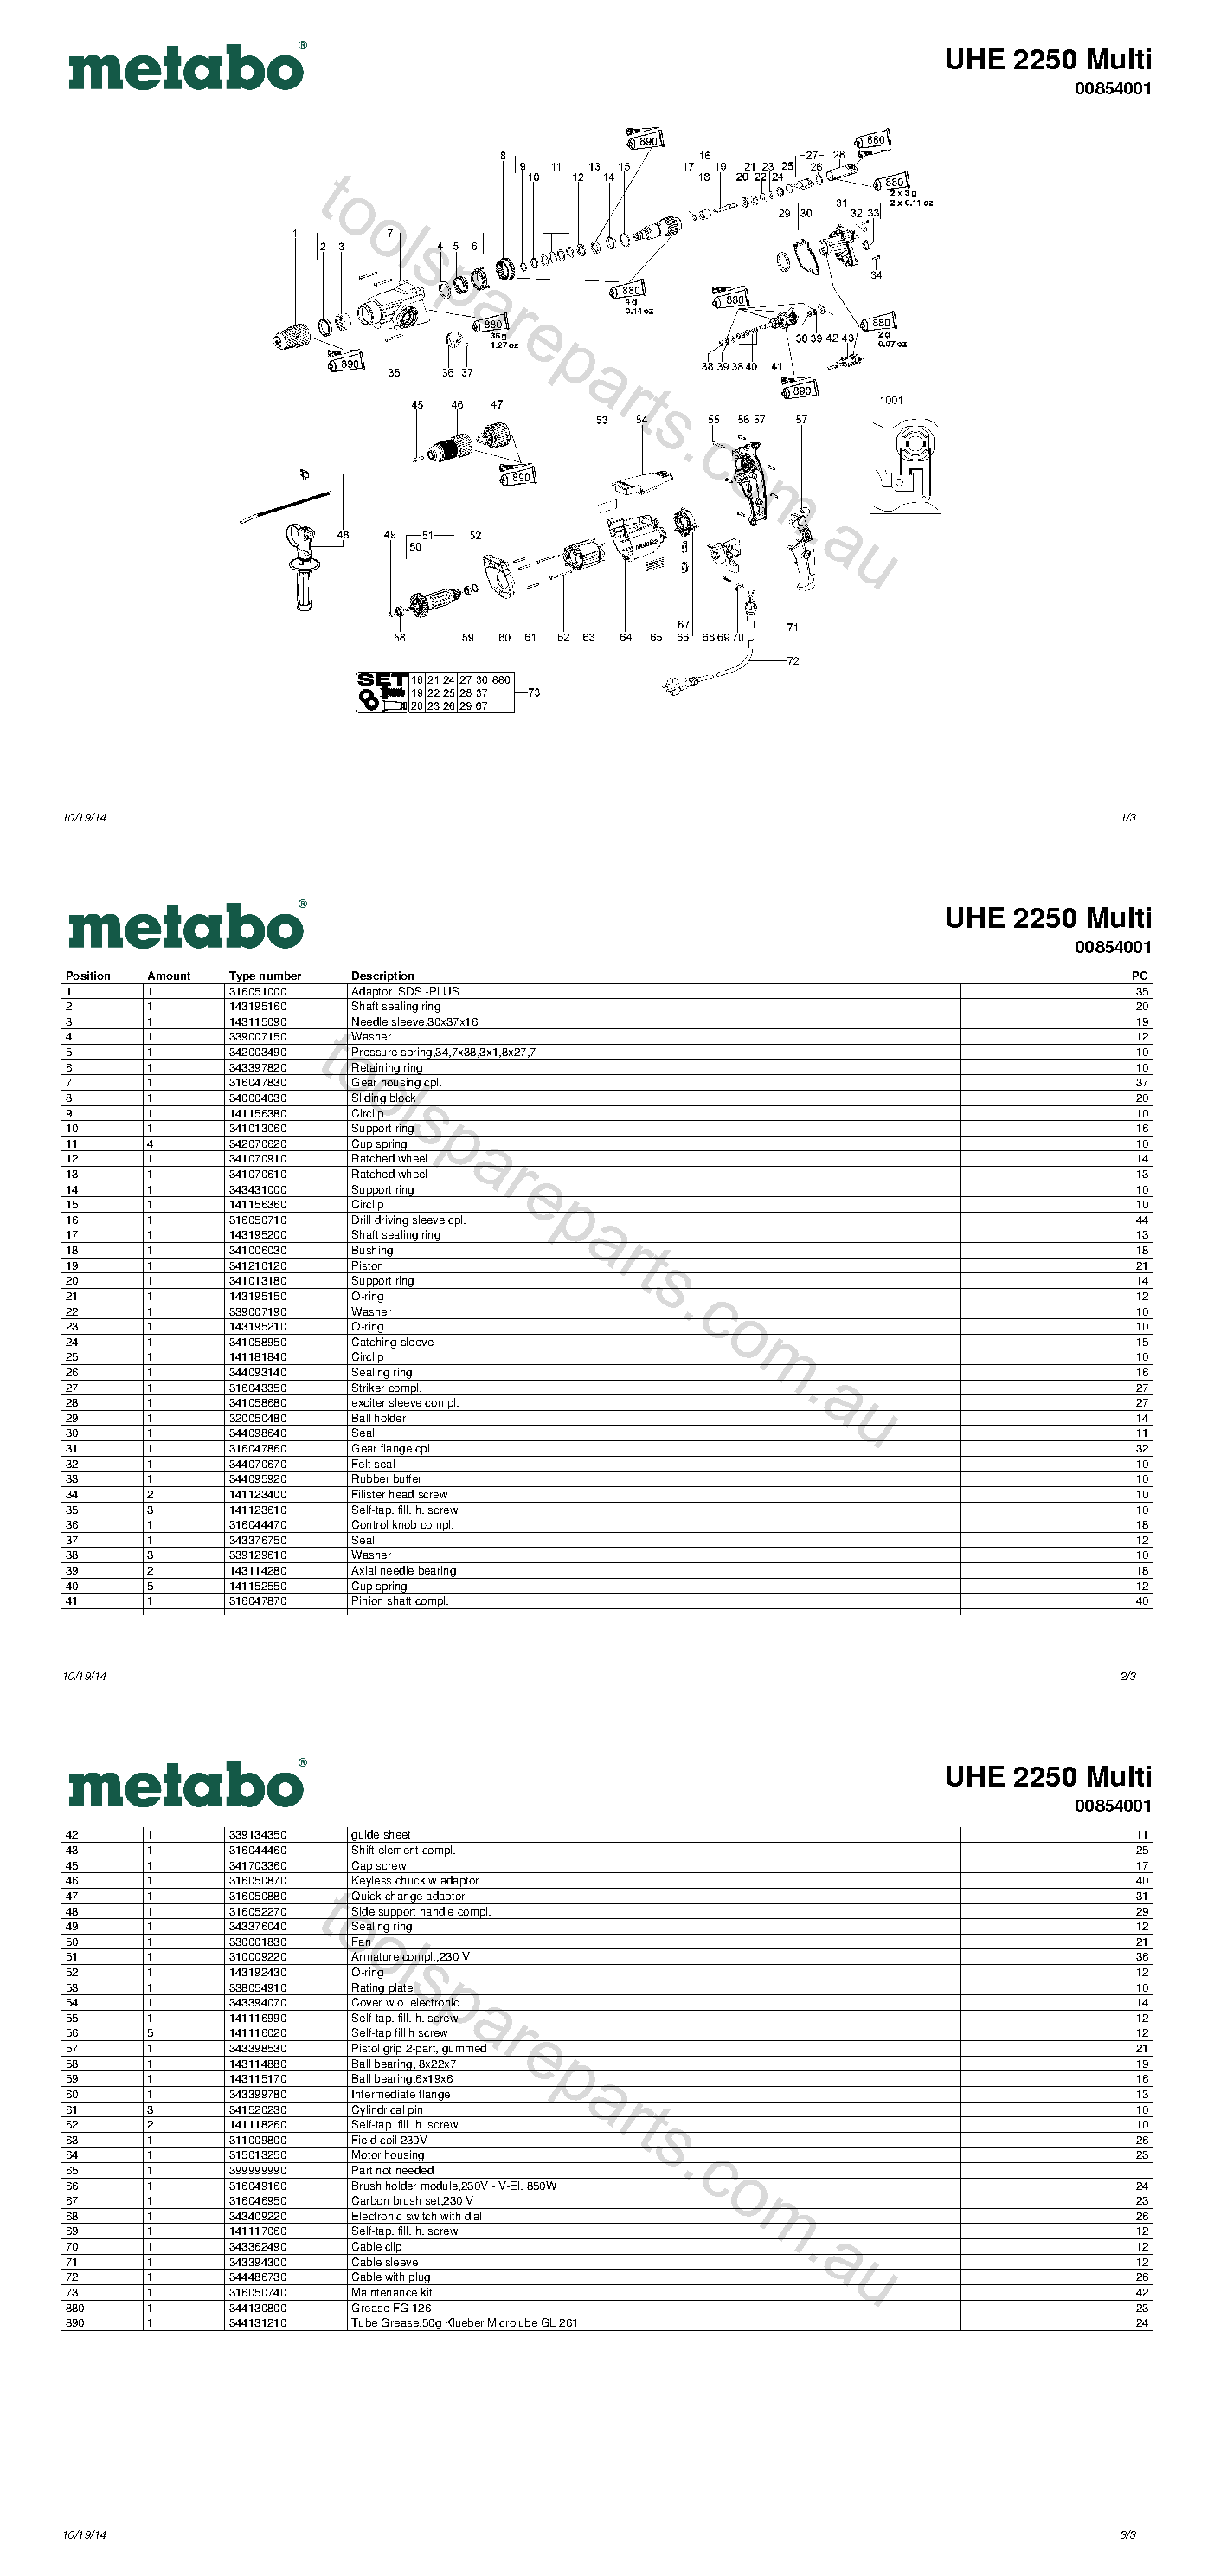 Metabo UHE 2250 Multi 00854001  Diagram 1